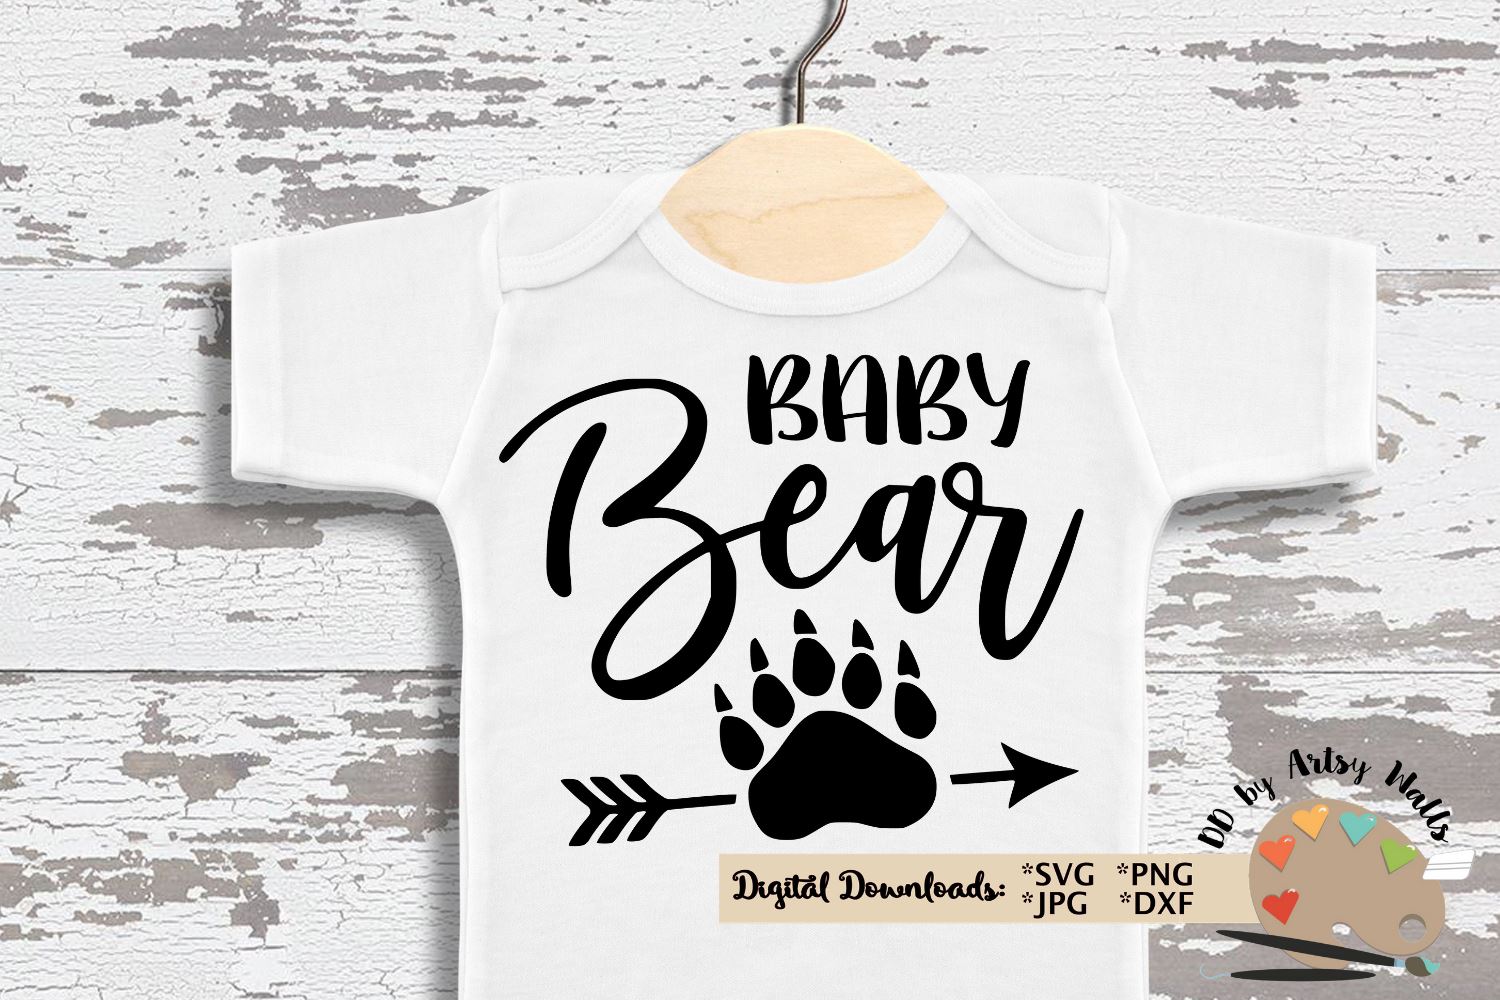 Baby Bear svg dxf – New baby gift – Baby onesie diy – Baby shower gift